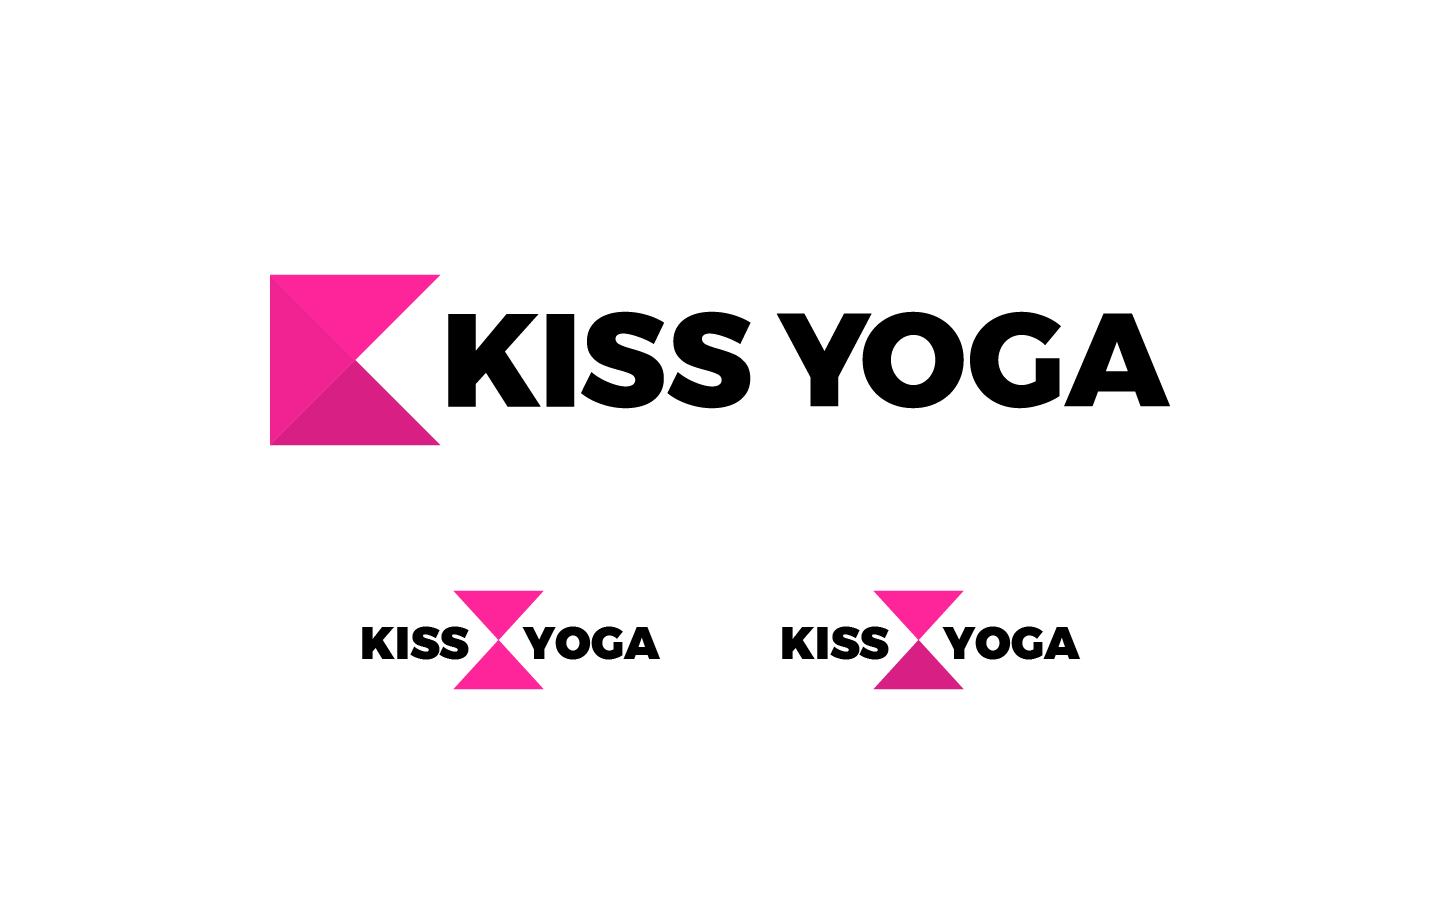 Kiss Yoga Alternate Logos - 2019